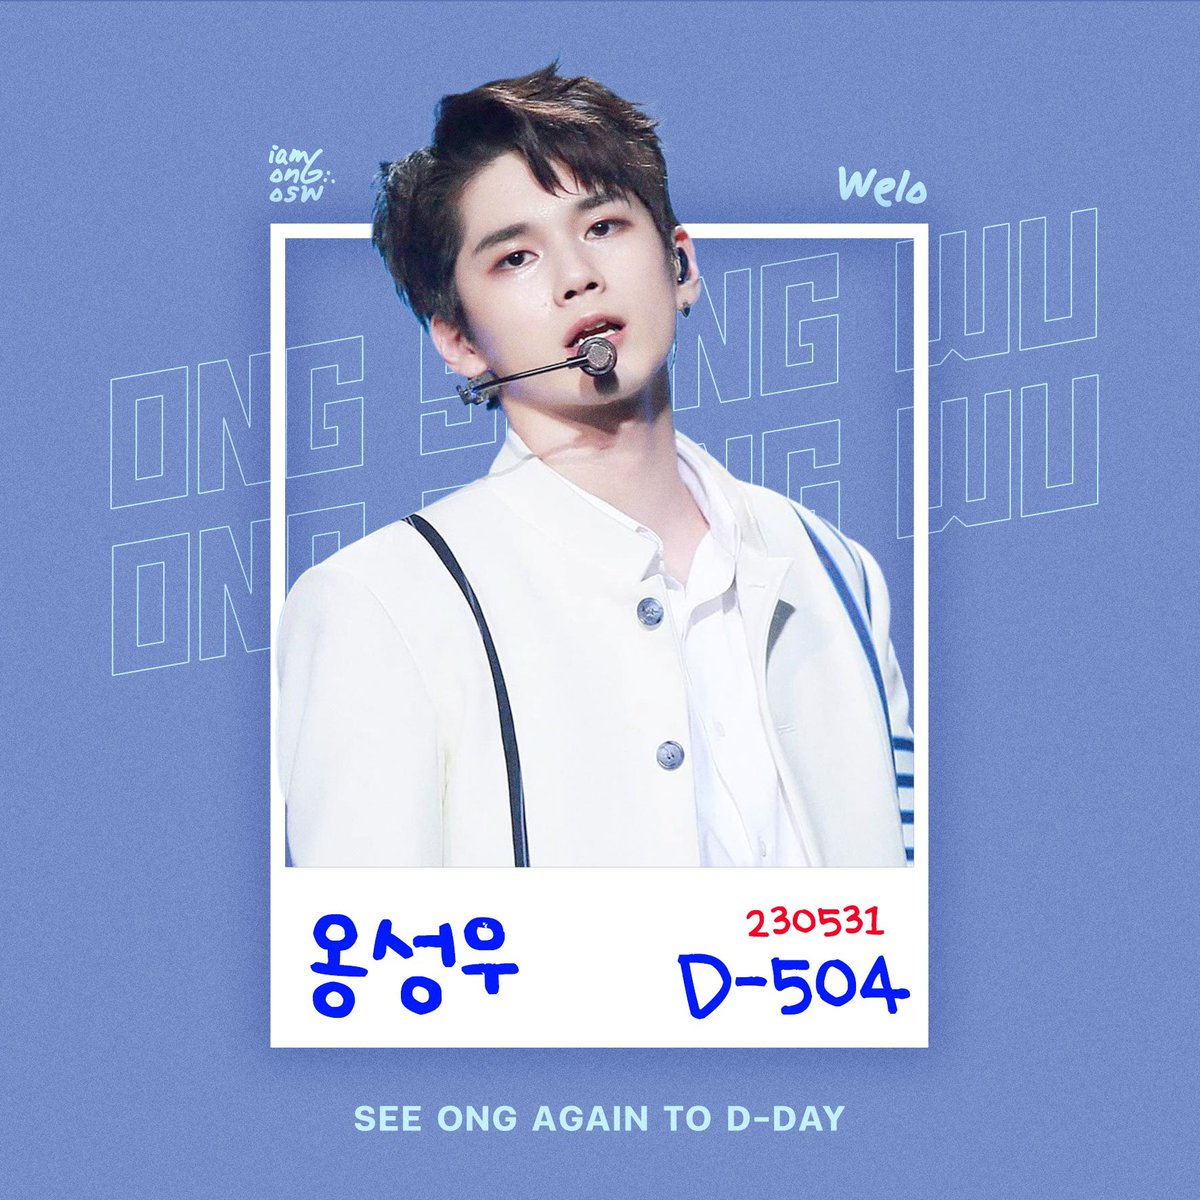 D-504 [230531] 💙💙
See Ong Again 

#welo #옹성우 #ong #ongseongwu #องซองอู